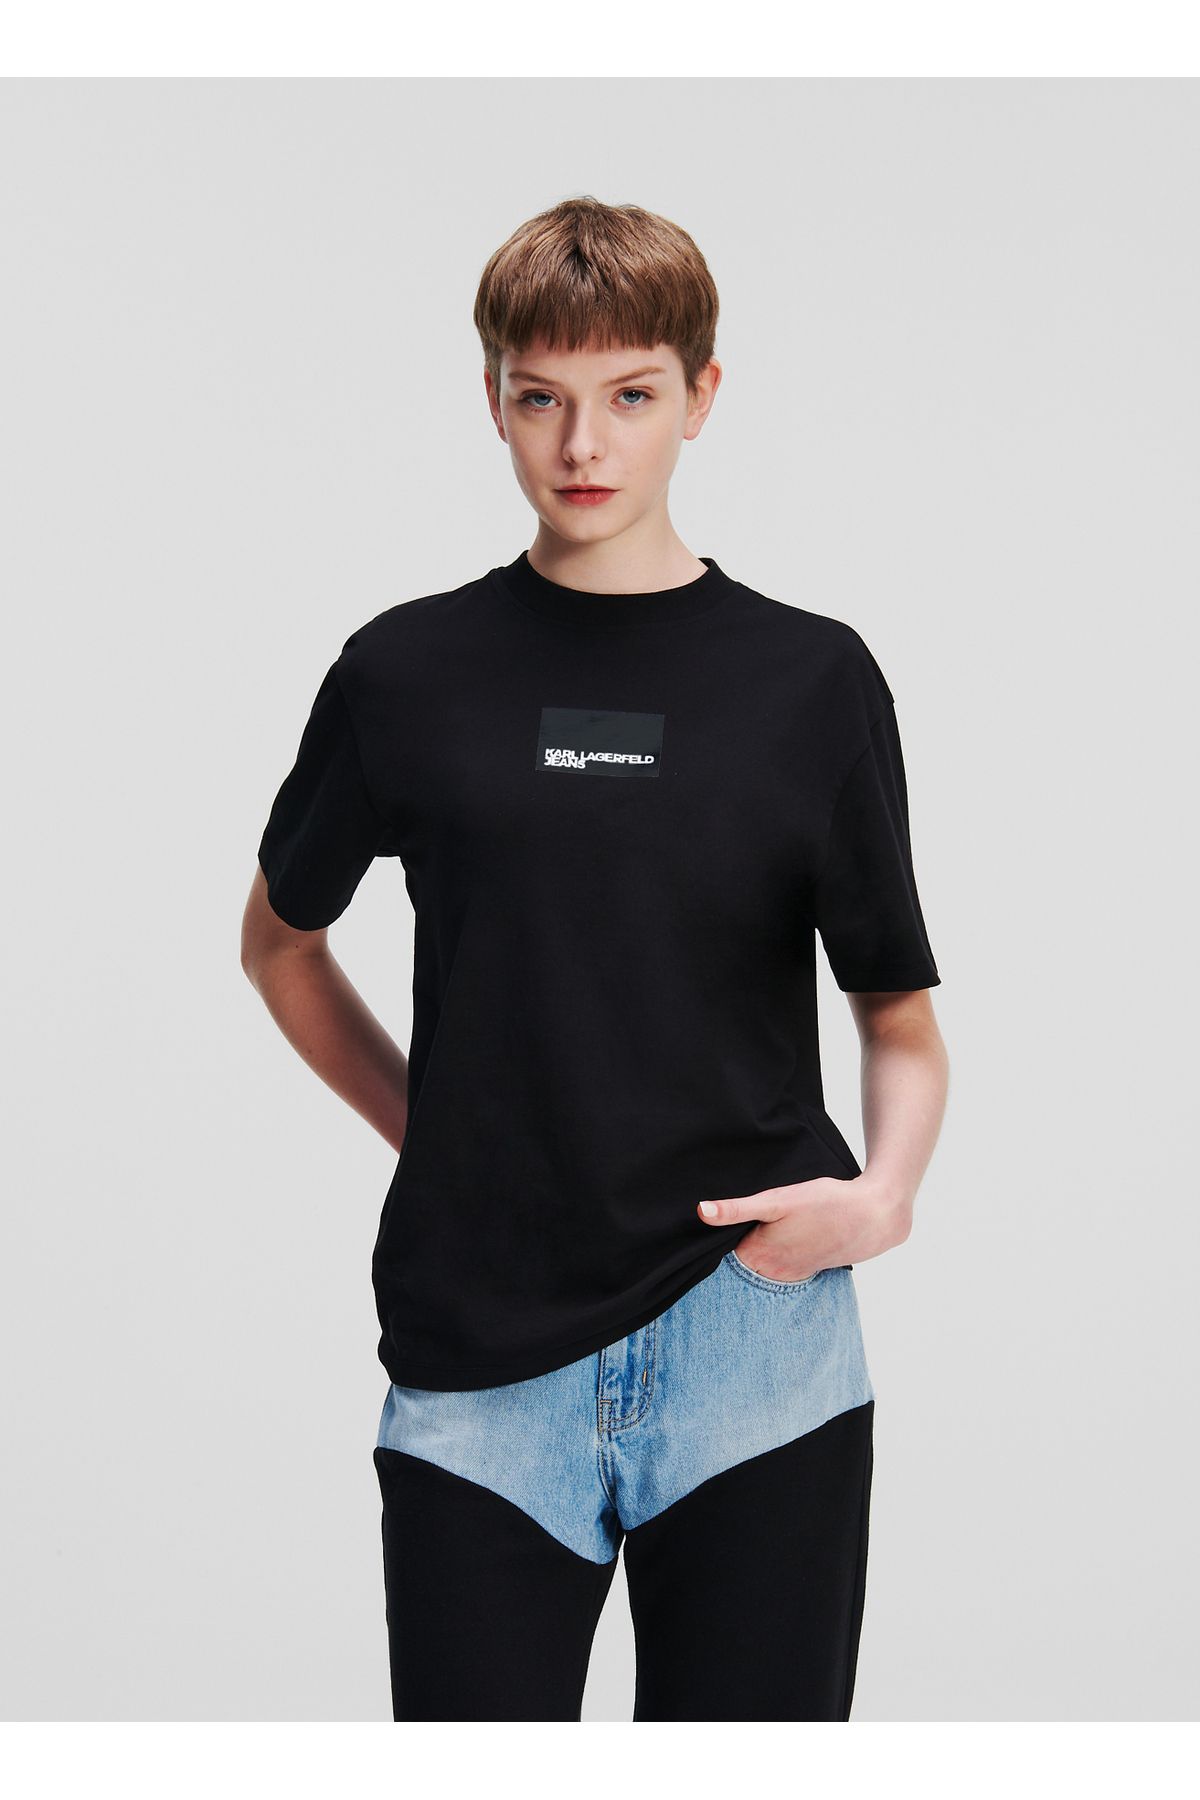 Karl Lagerfeld Jeans Bisiklet Yaka Düz Siyah Kadın T-shirt 236j1700